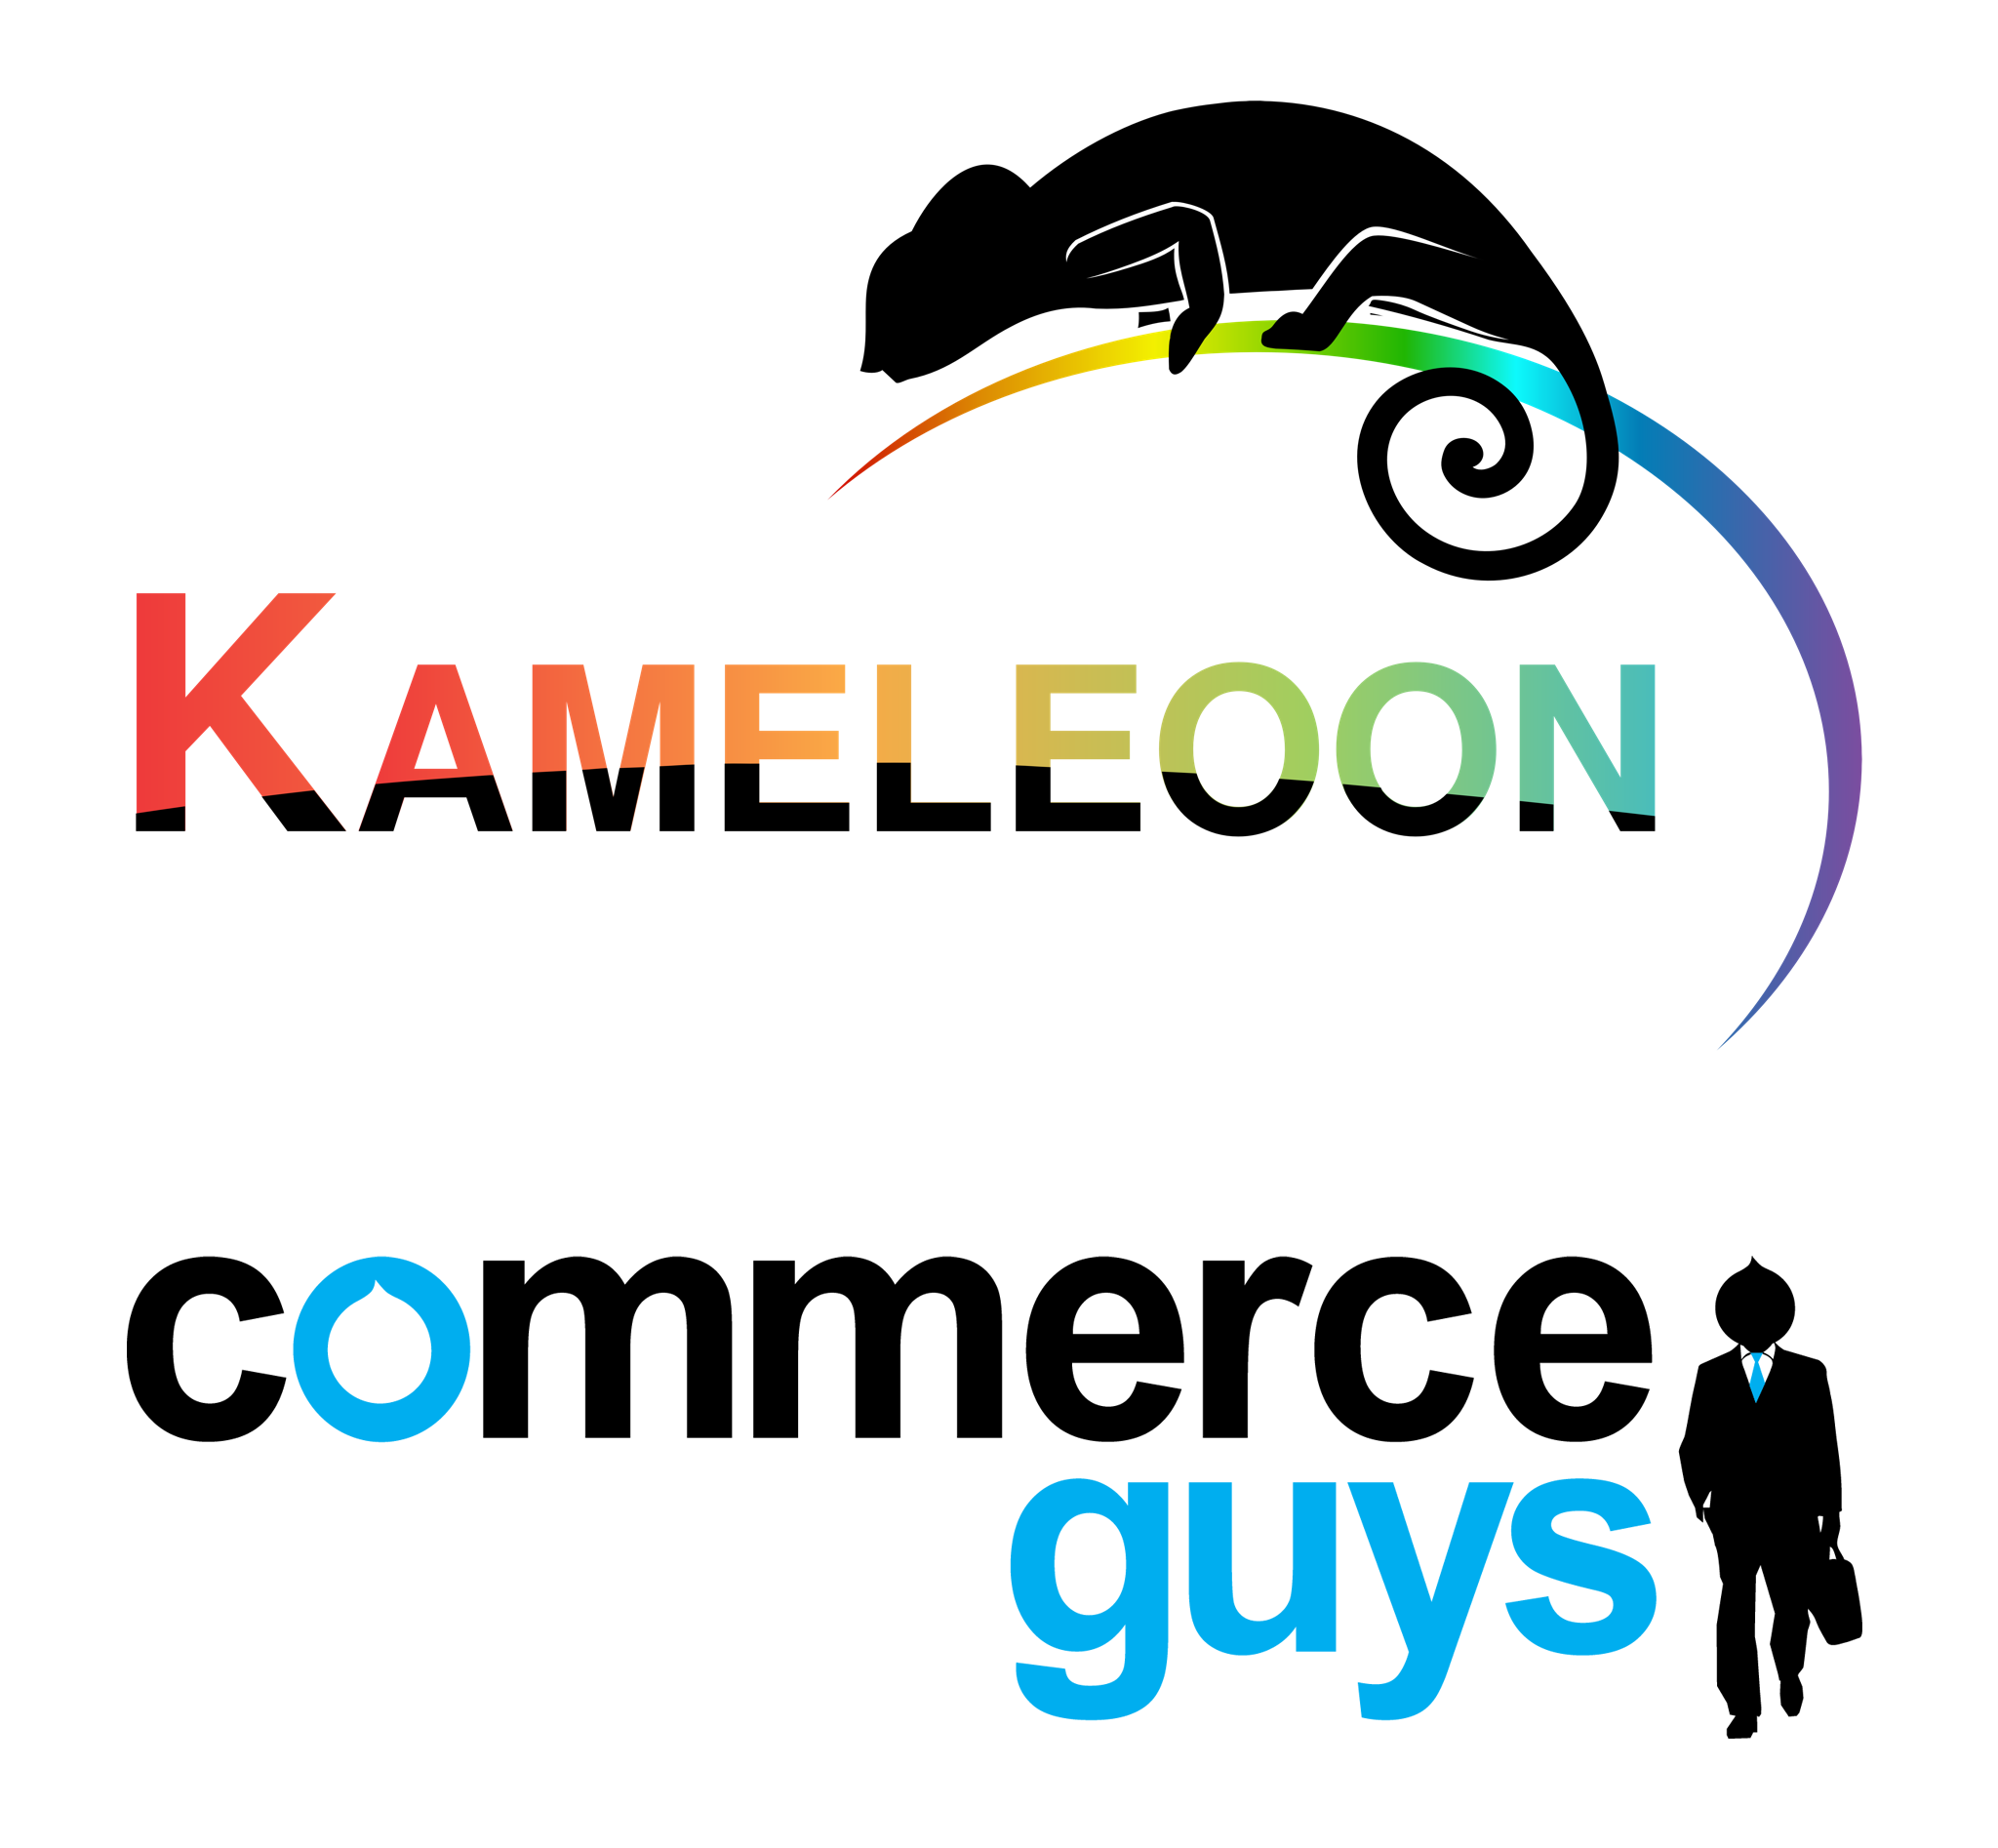 Kameleoon and Commerce Guys